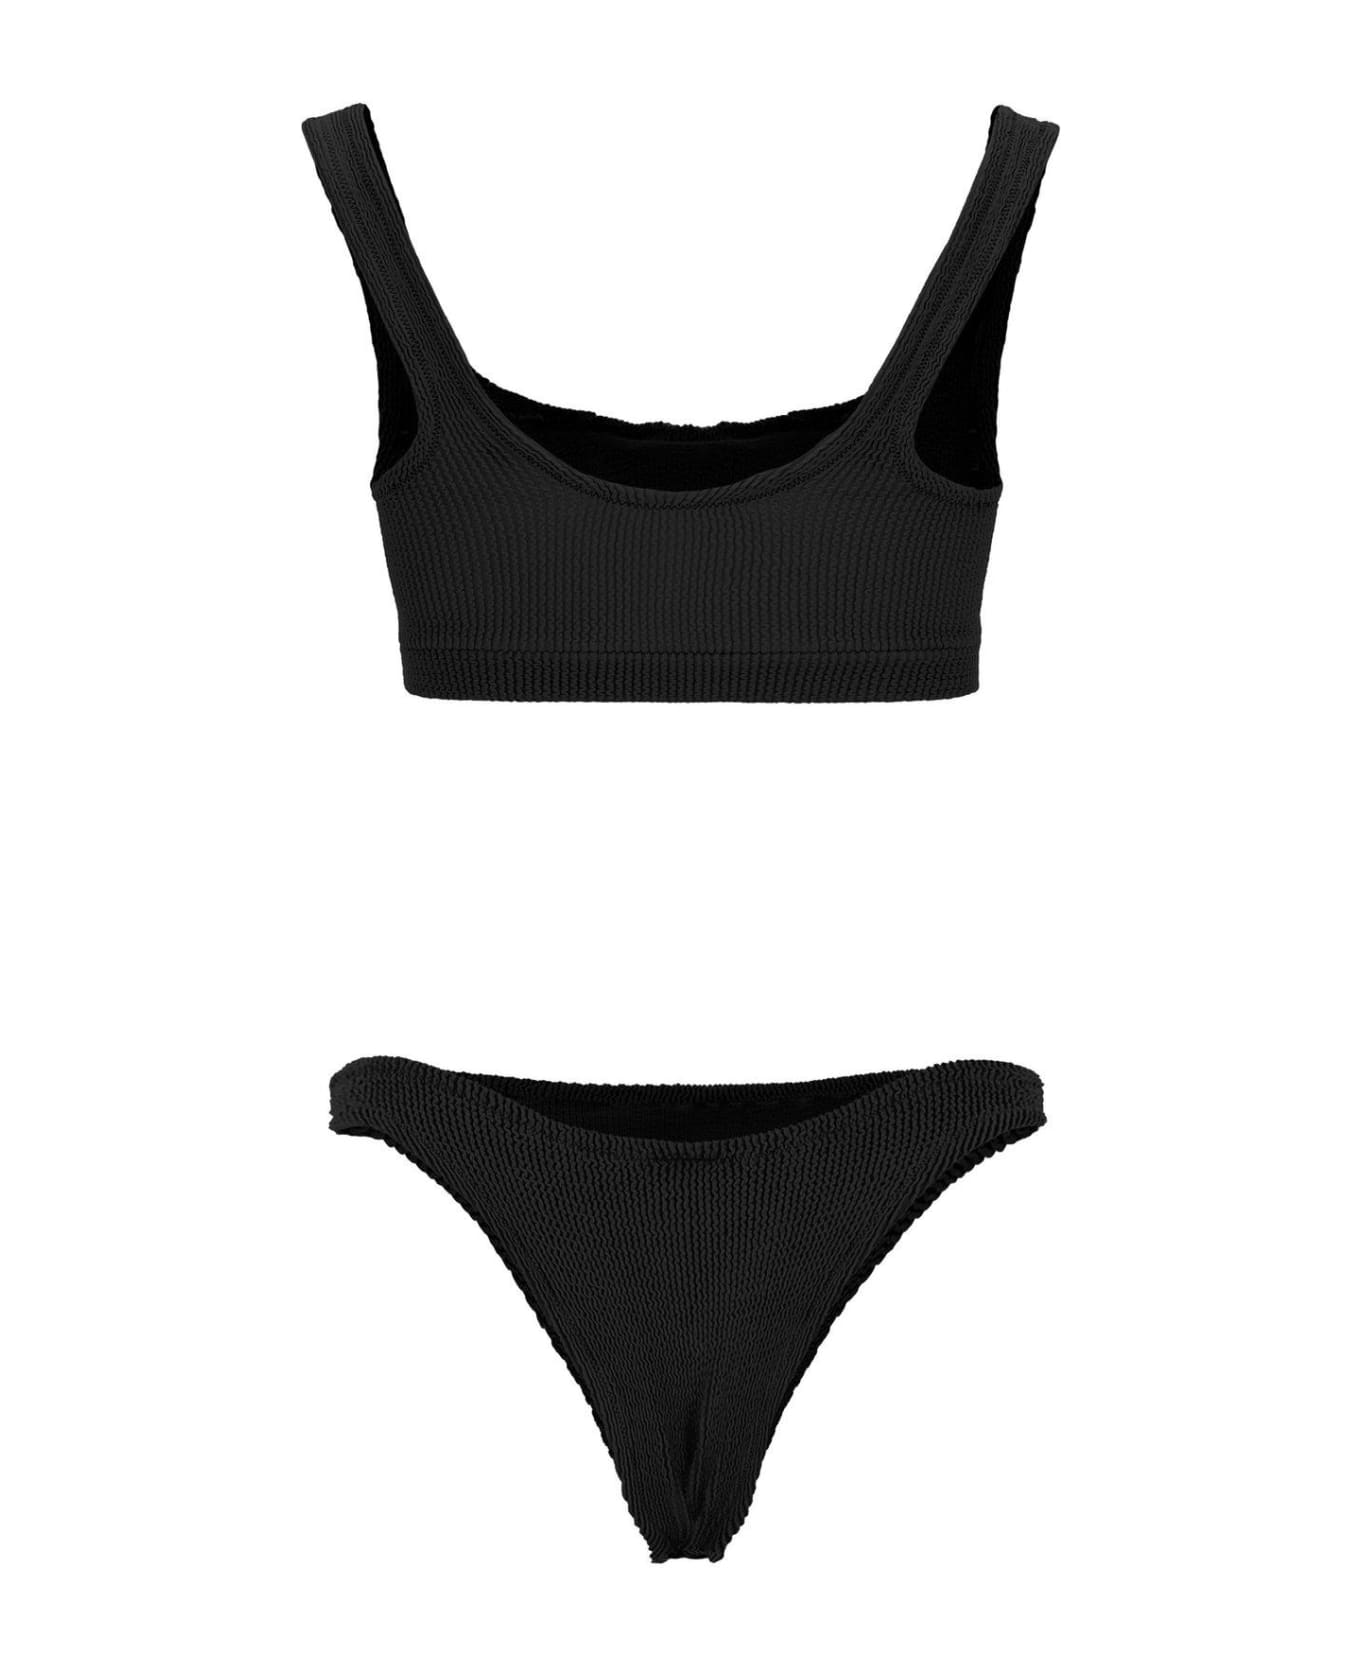 Reina Olga Ginny Boobs Stretch Bikini Set - Black ビキニ